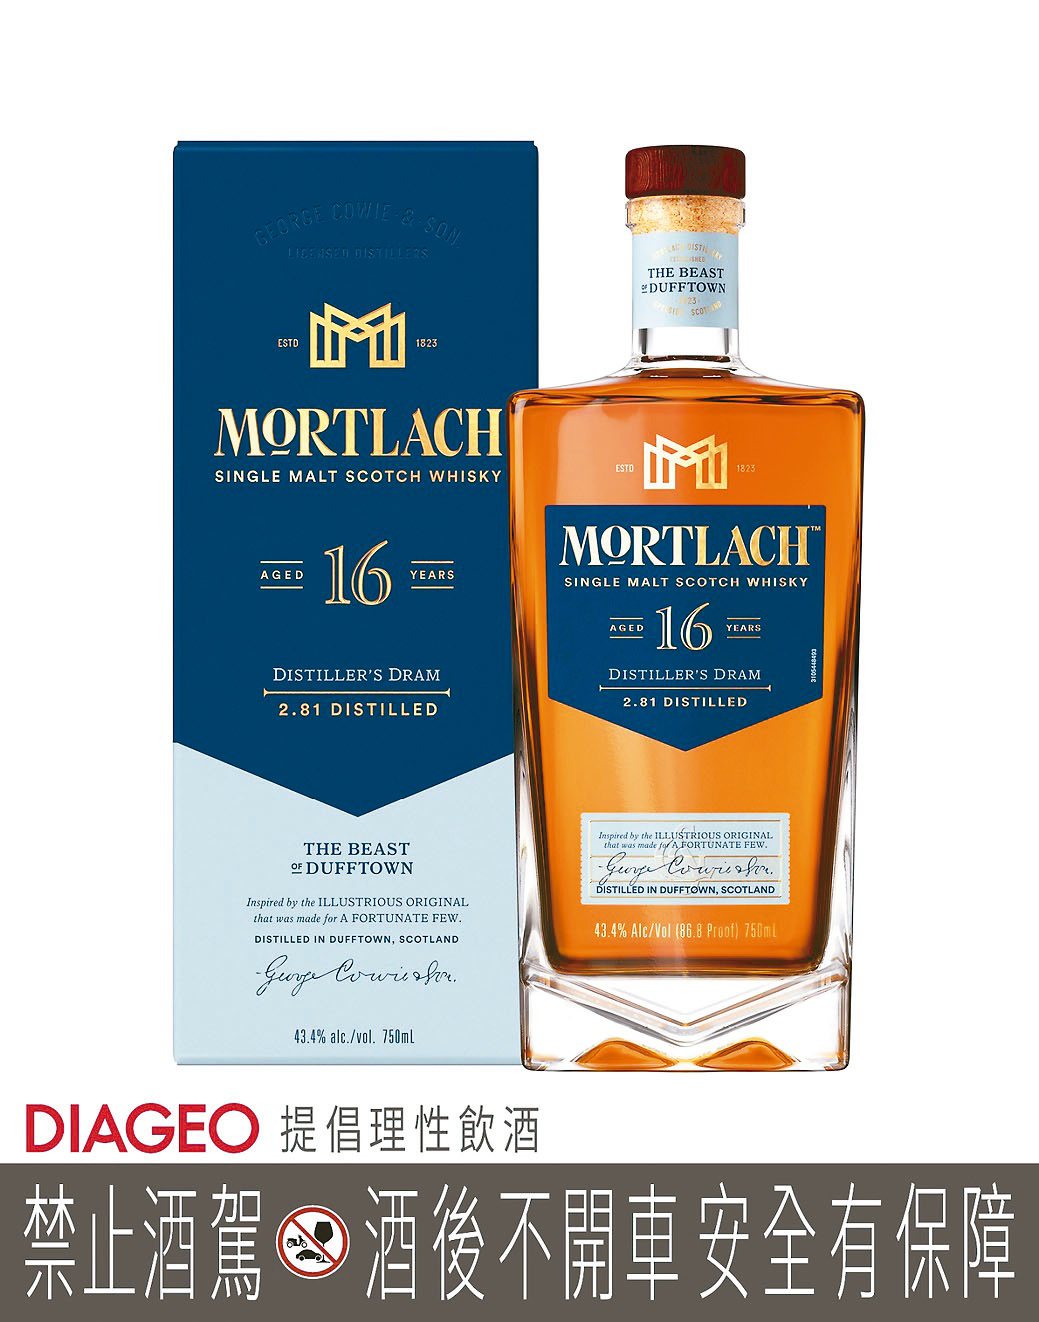 Mortlach慕赫16年單一麥芽威士忌，容量：750ml，酒精濃度：43.4%，建議售價：2,900元。 DIAGEO／提供